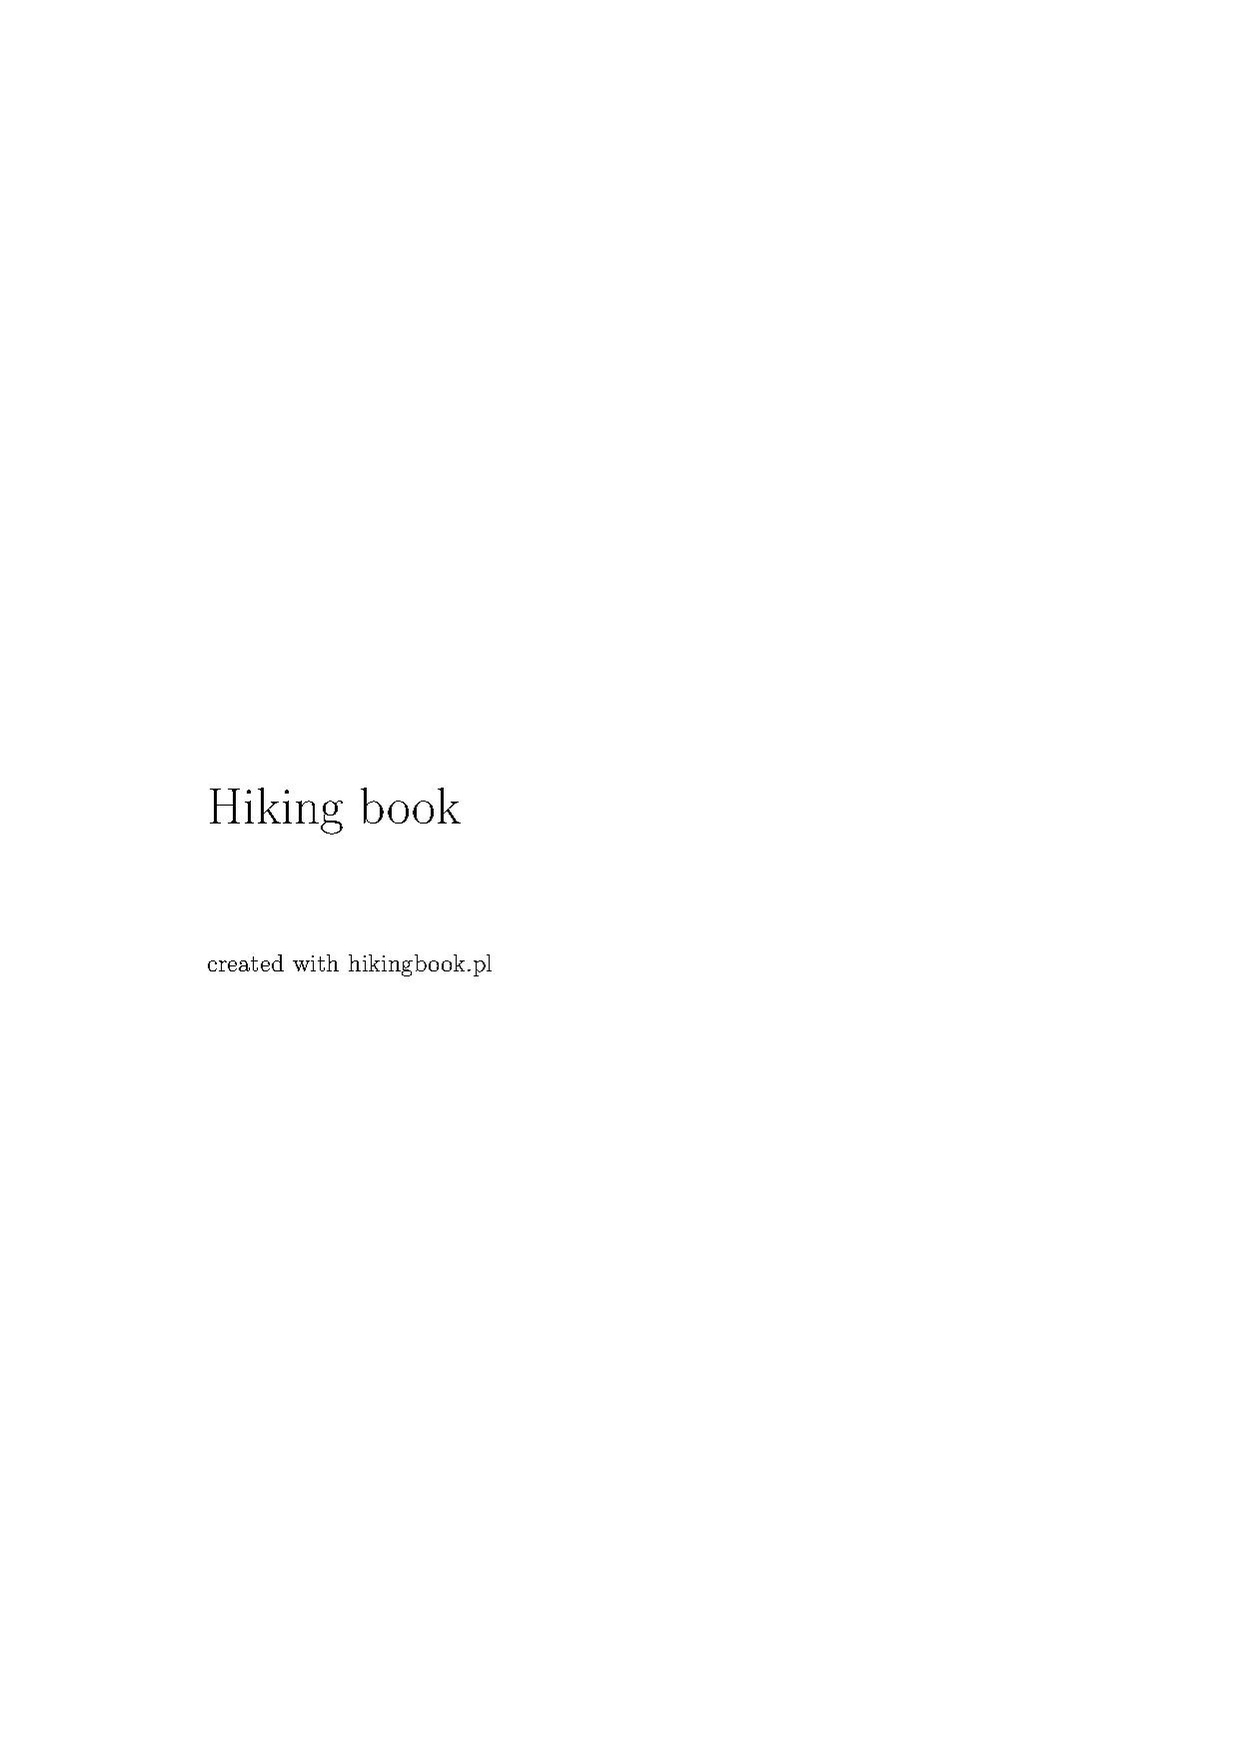 HikingbookSwitzerland05.pdf